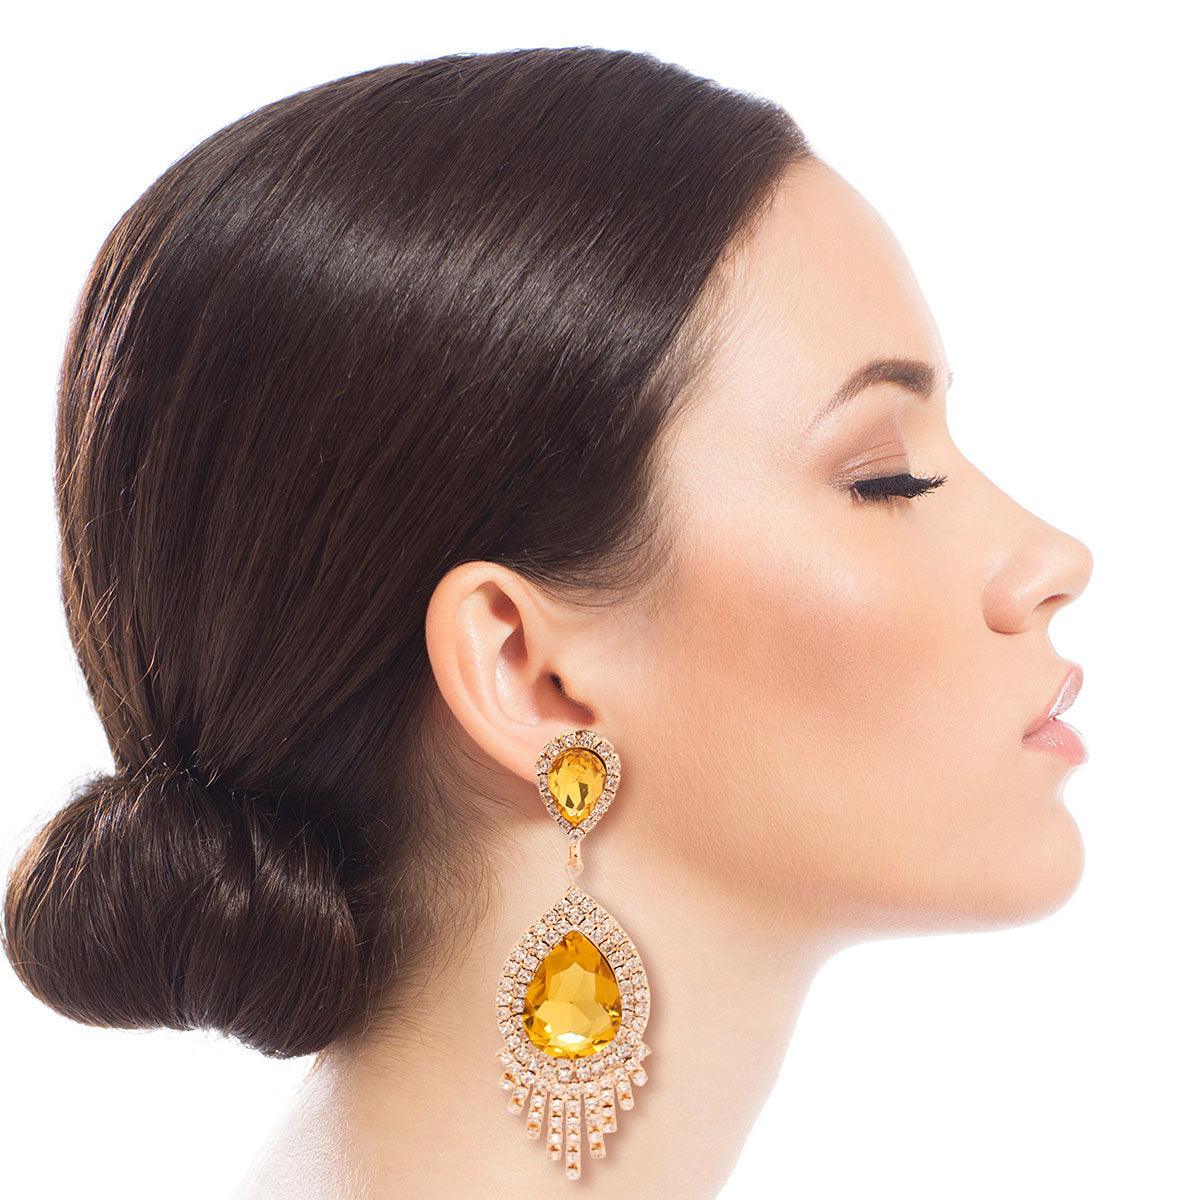 Teardrop Fringe Earrings: Where Sparkle Meets Edgy Elegance